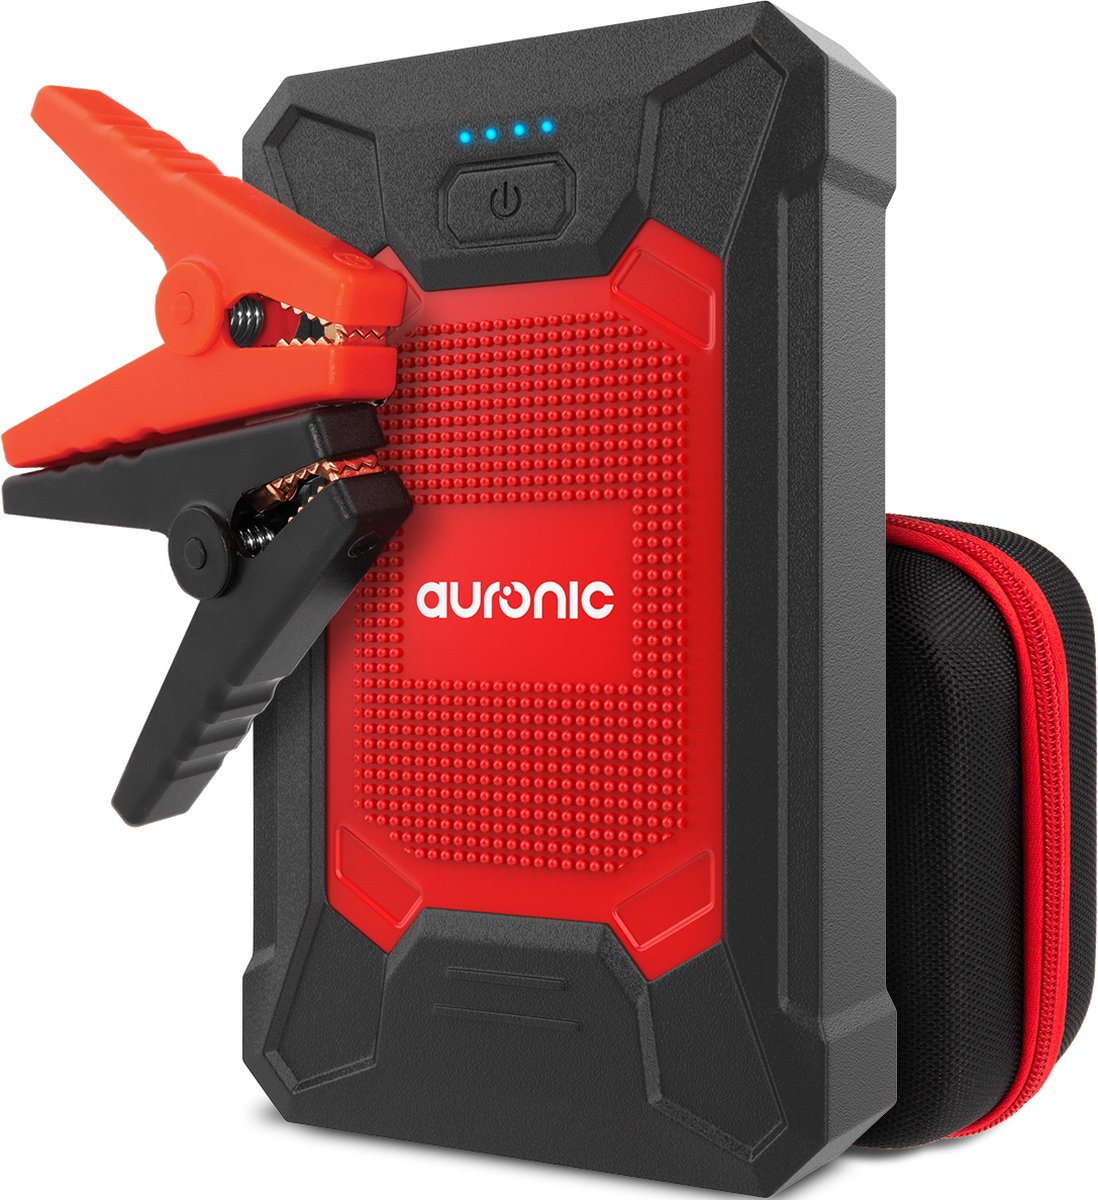 Auronic 12V Jumpstarter voor Auto – 600A / 7.200 mAh – 4-in-1 starthulp – Incl. tas - Rood/Zwart - Auronic